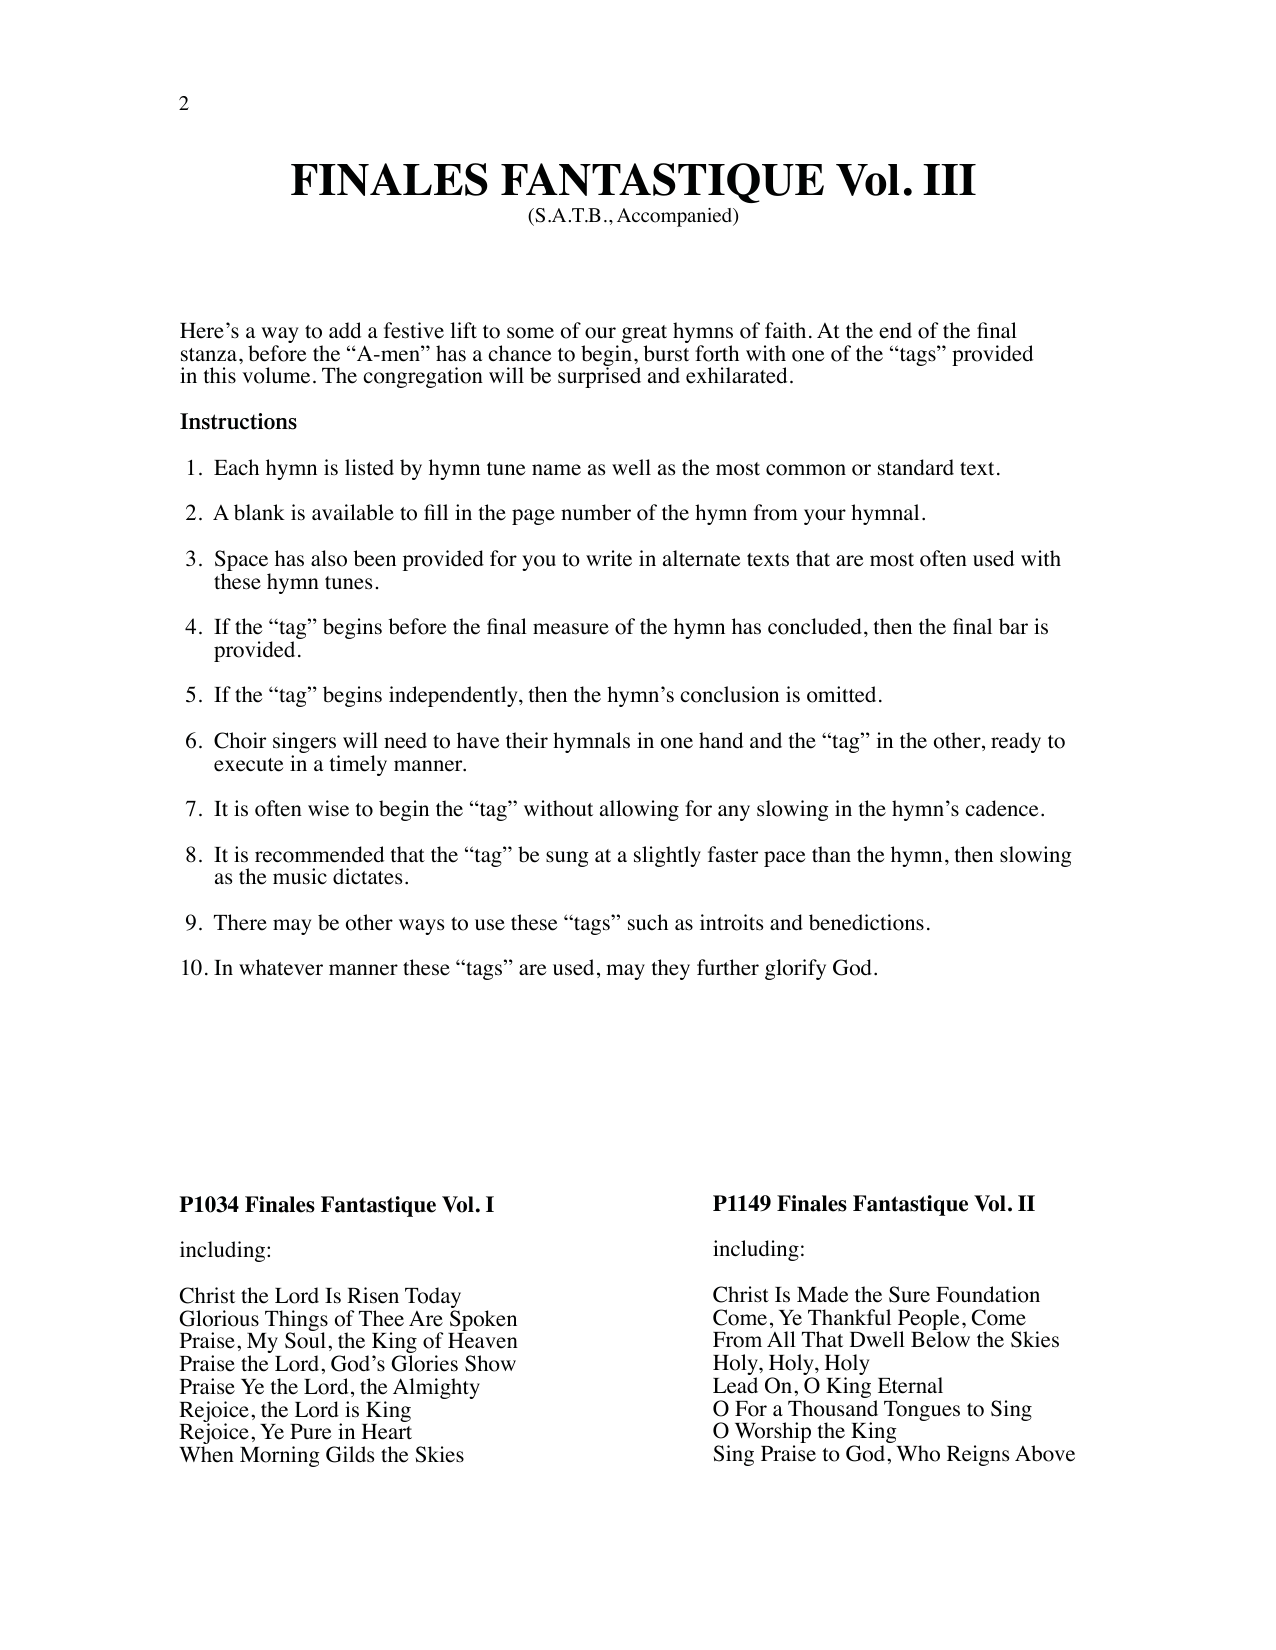 Allan Petker Finales Fantastique Vol. III Sheet Music Notes & Chords for Choral - Download or Print PDF